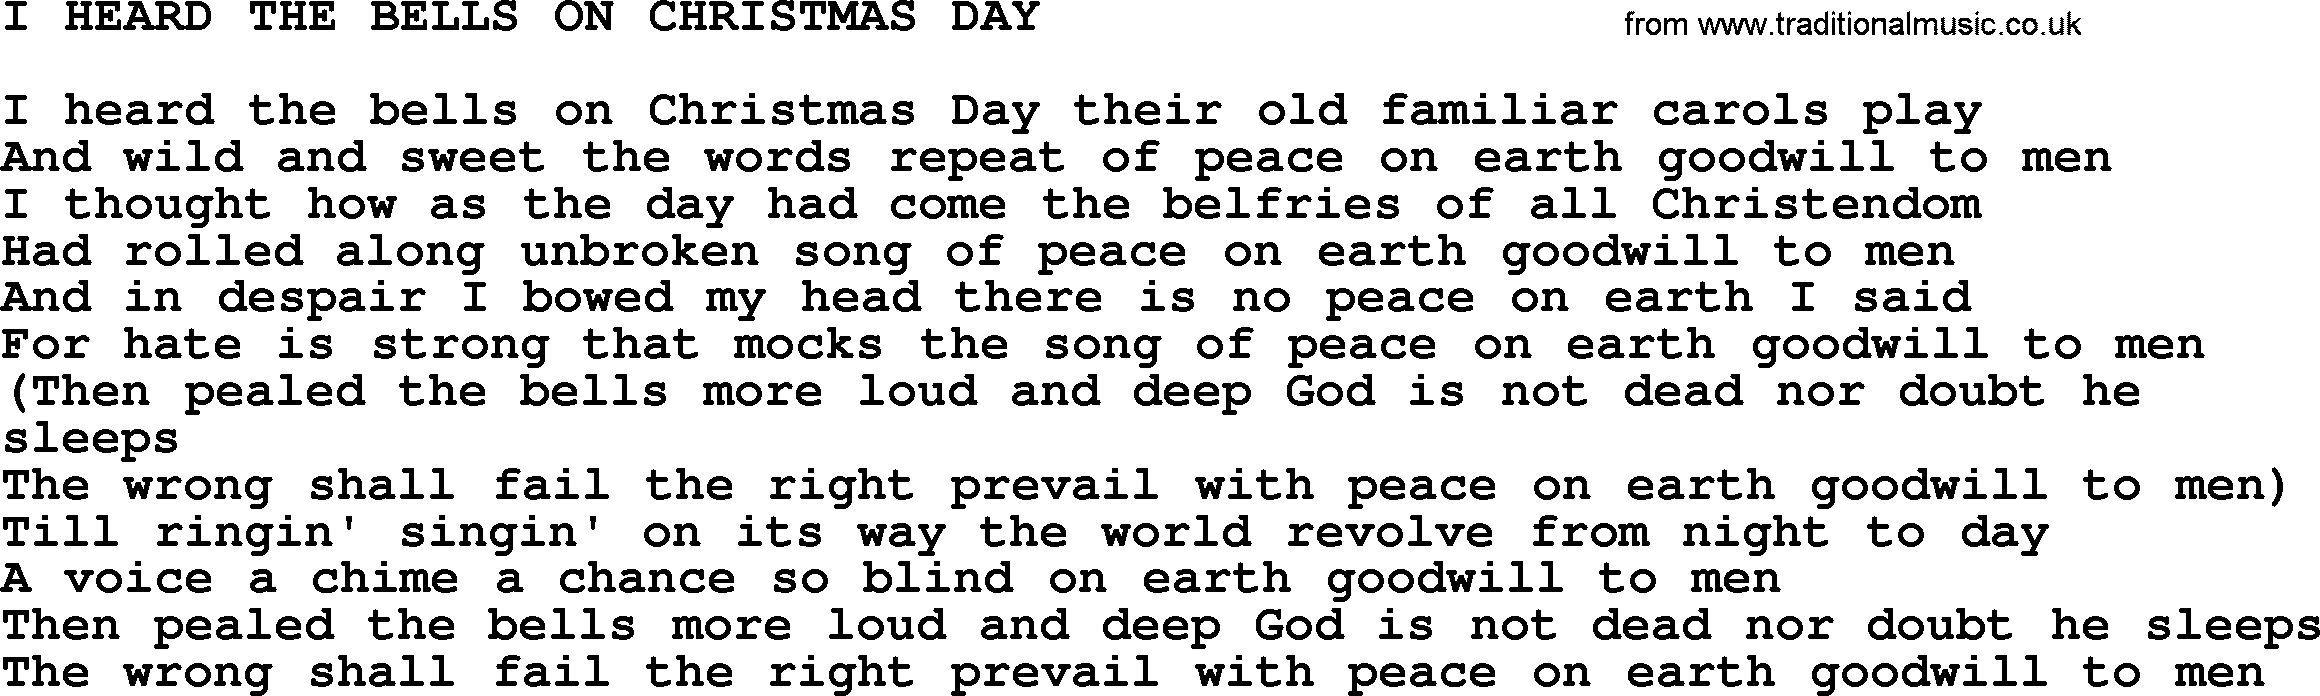 Johnny Cash song I Heard The Bells On Christmas Day.txt lyrics